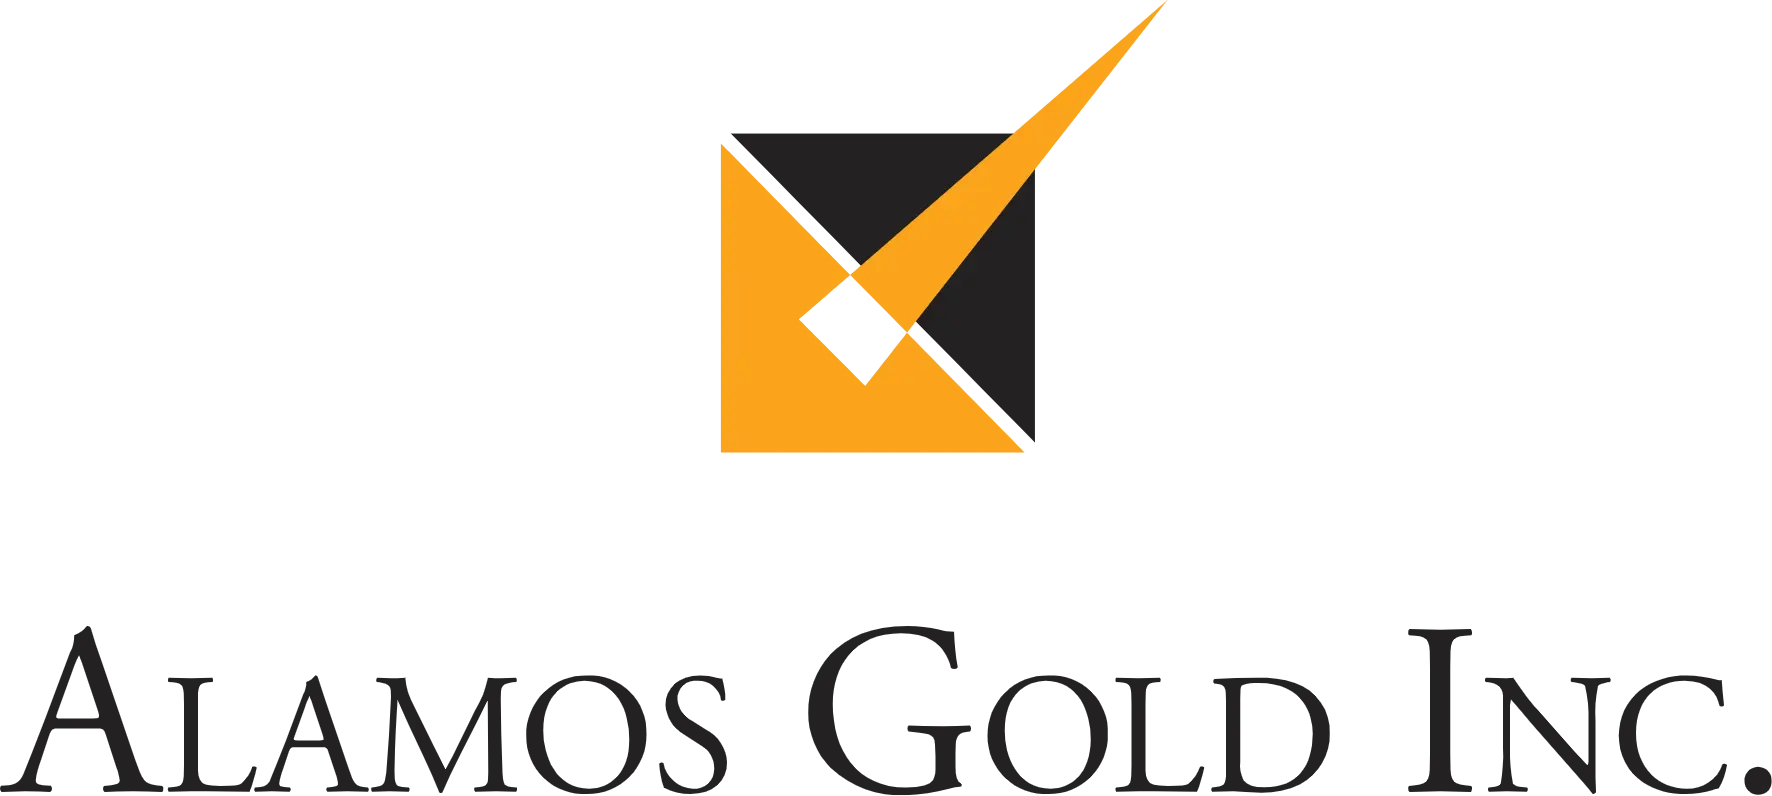 Alamos Gold : Brand Short Description Type Here.